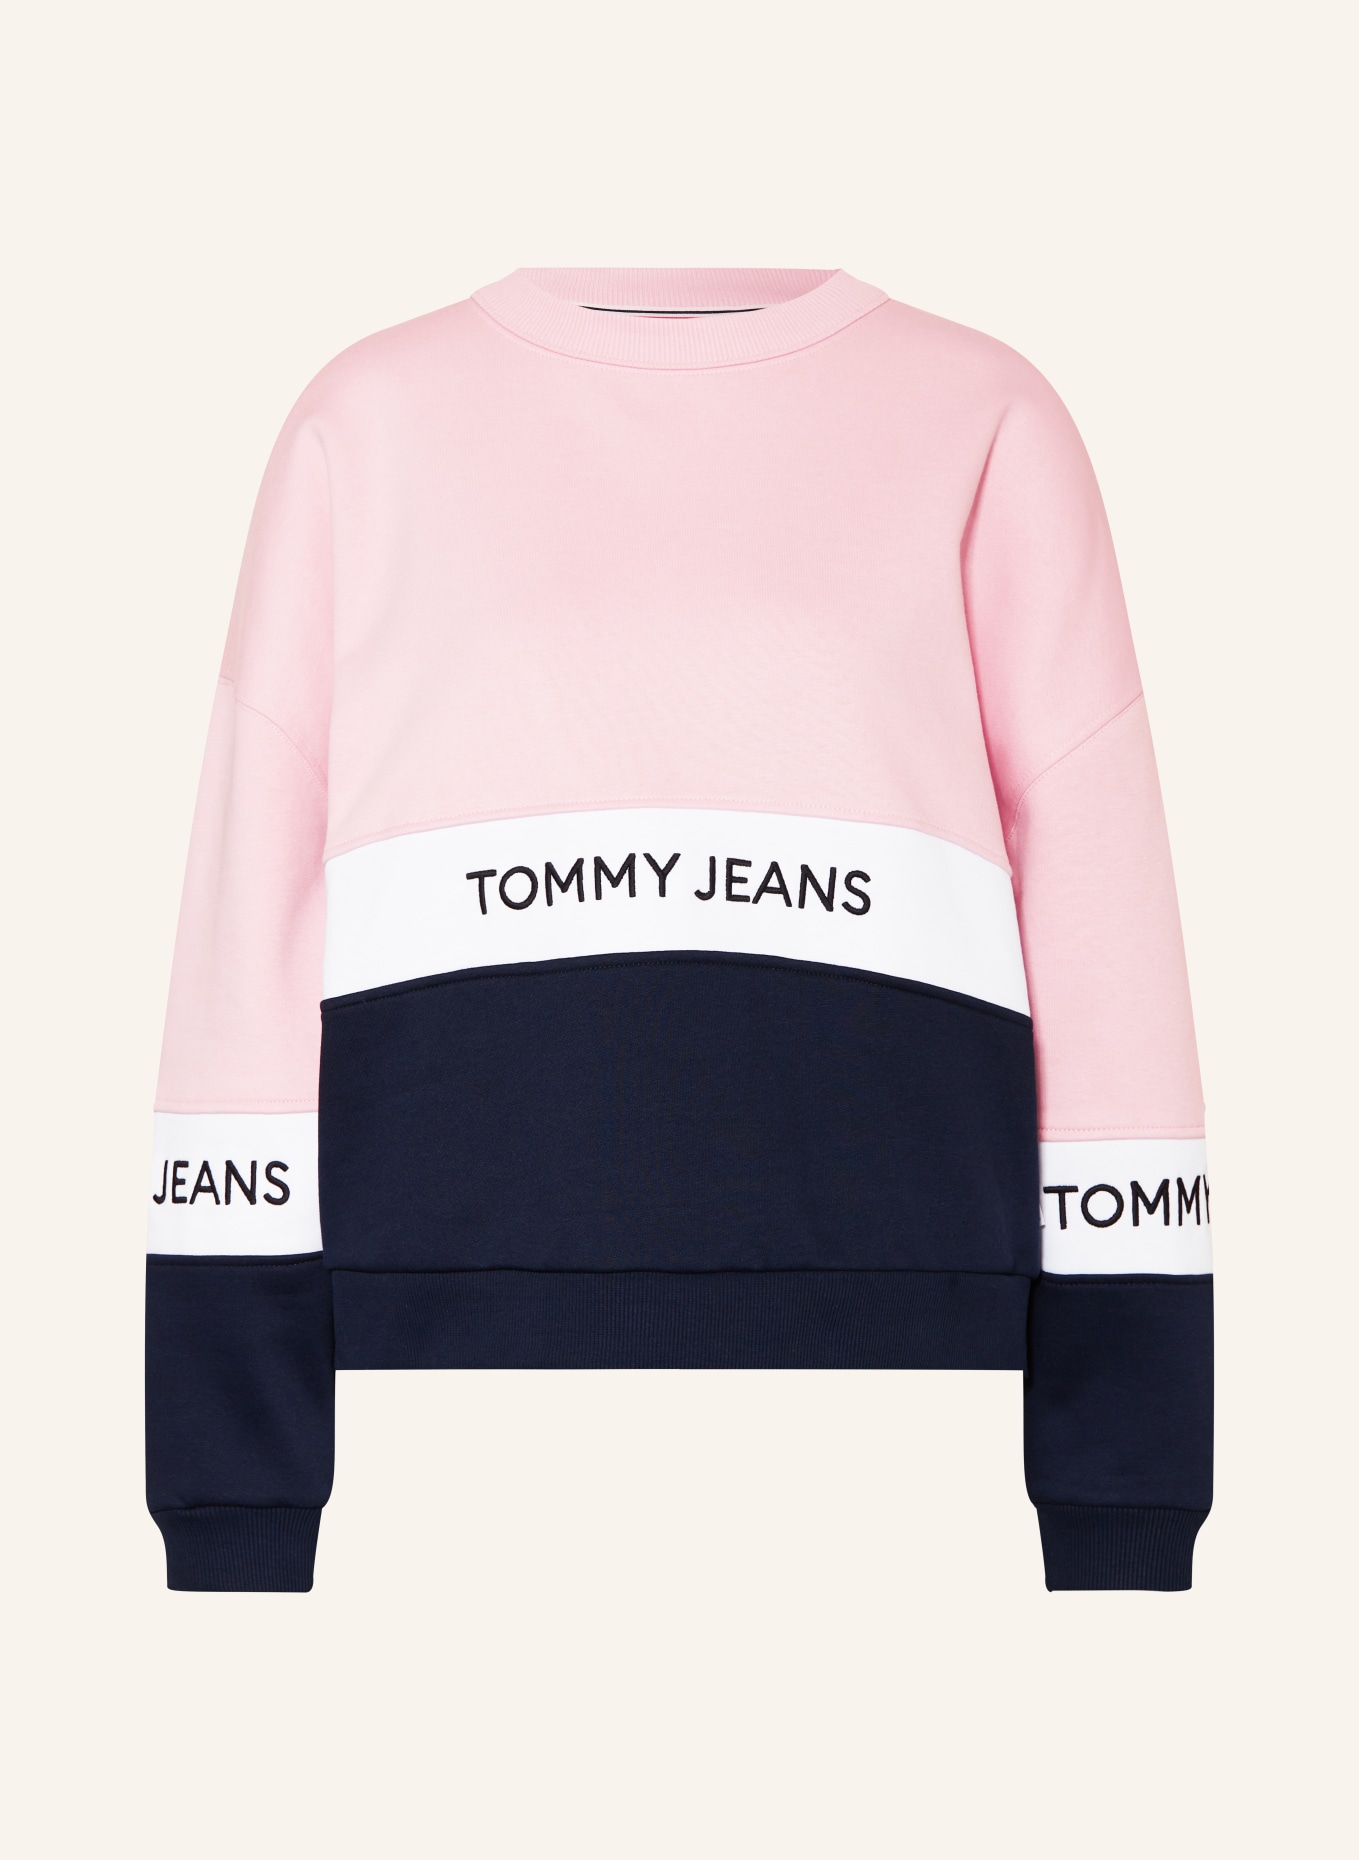 TOMMY JEANS Sweatshirt, Farbe: ROSA/ WEISS/ DUNKELBLAU (Bild 1)